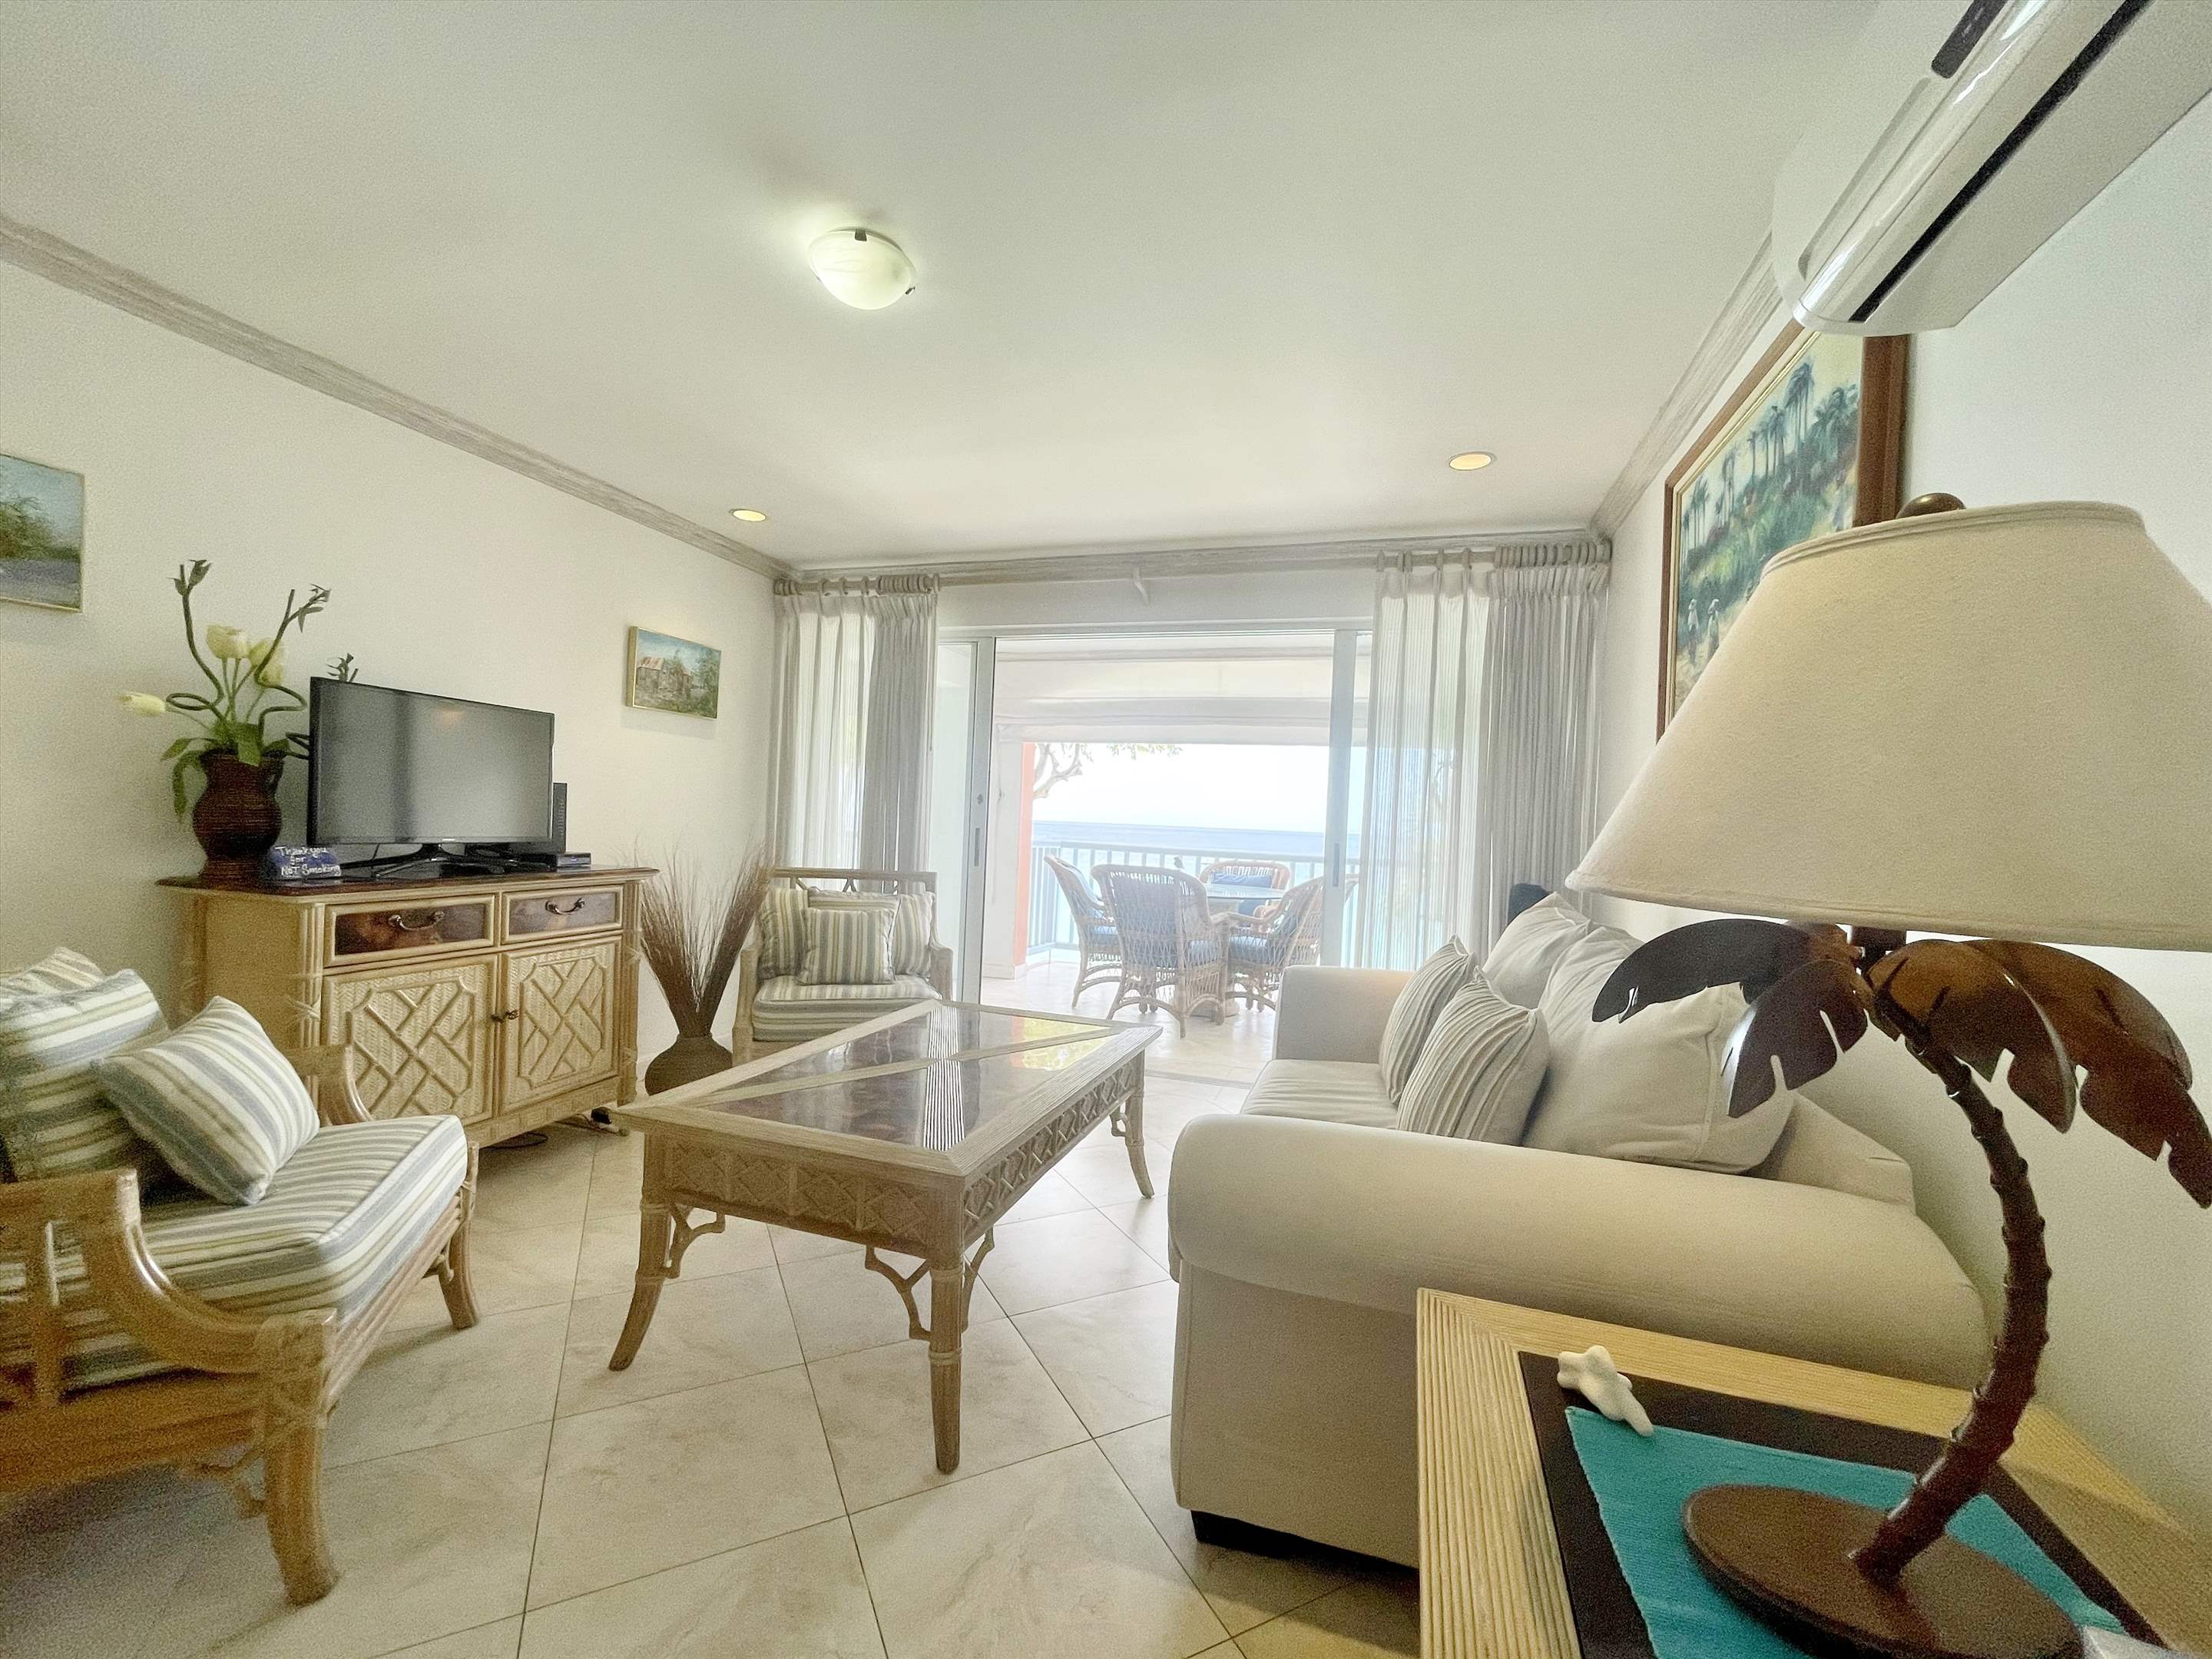 Villas on the Beach 303, 1 bedroom, 1 bedroom apartment in St. James & West Coast, Barbados Photo #7